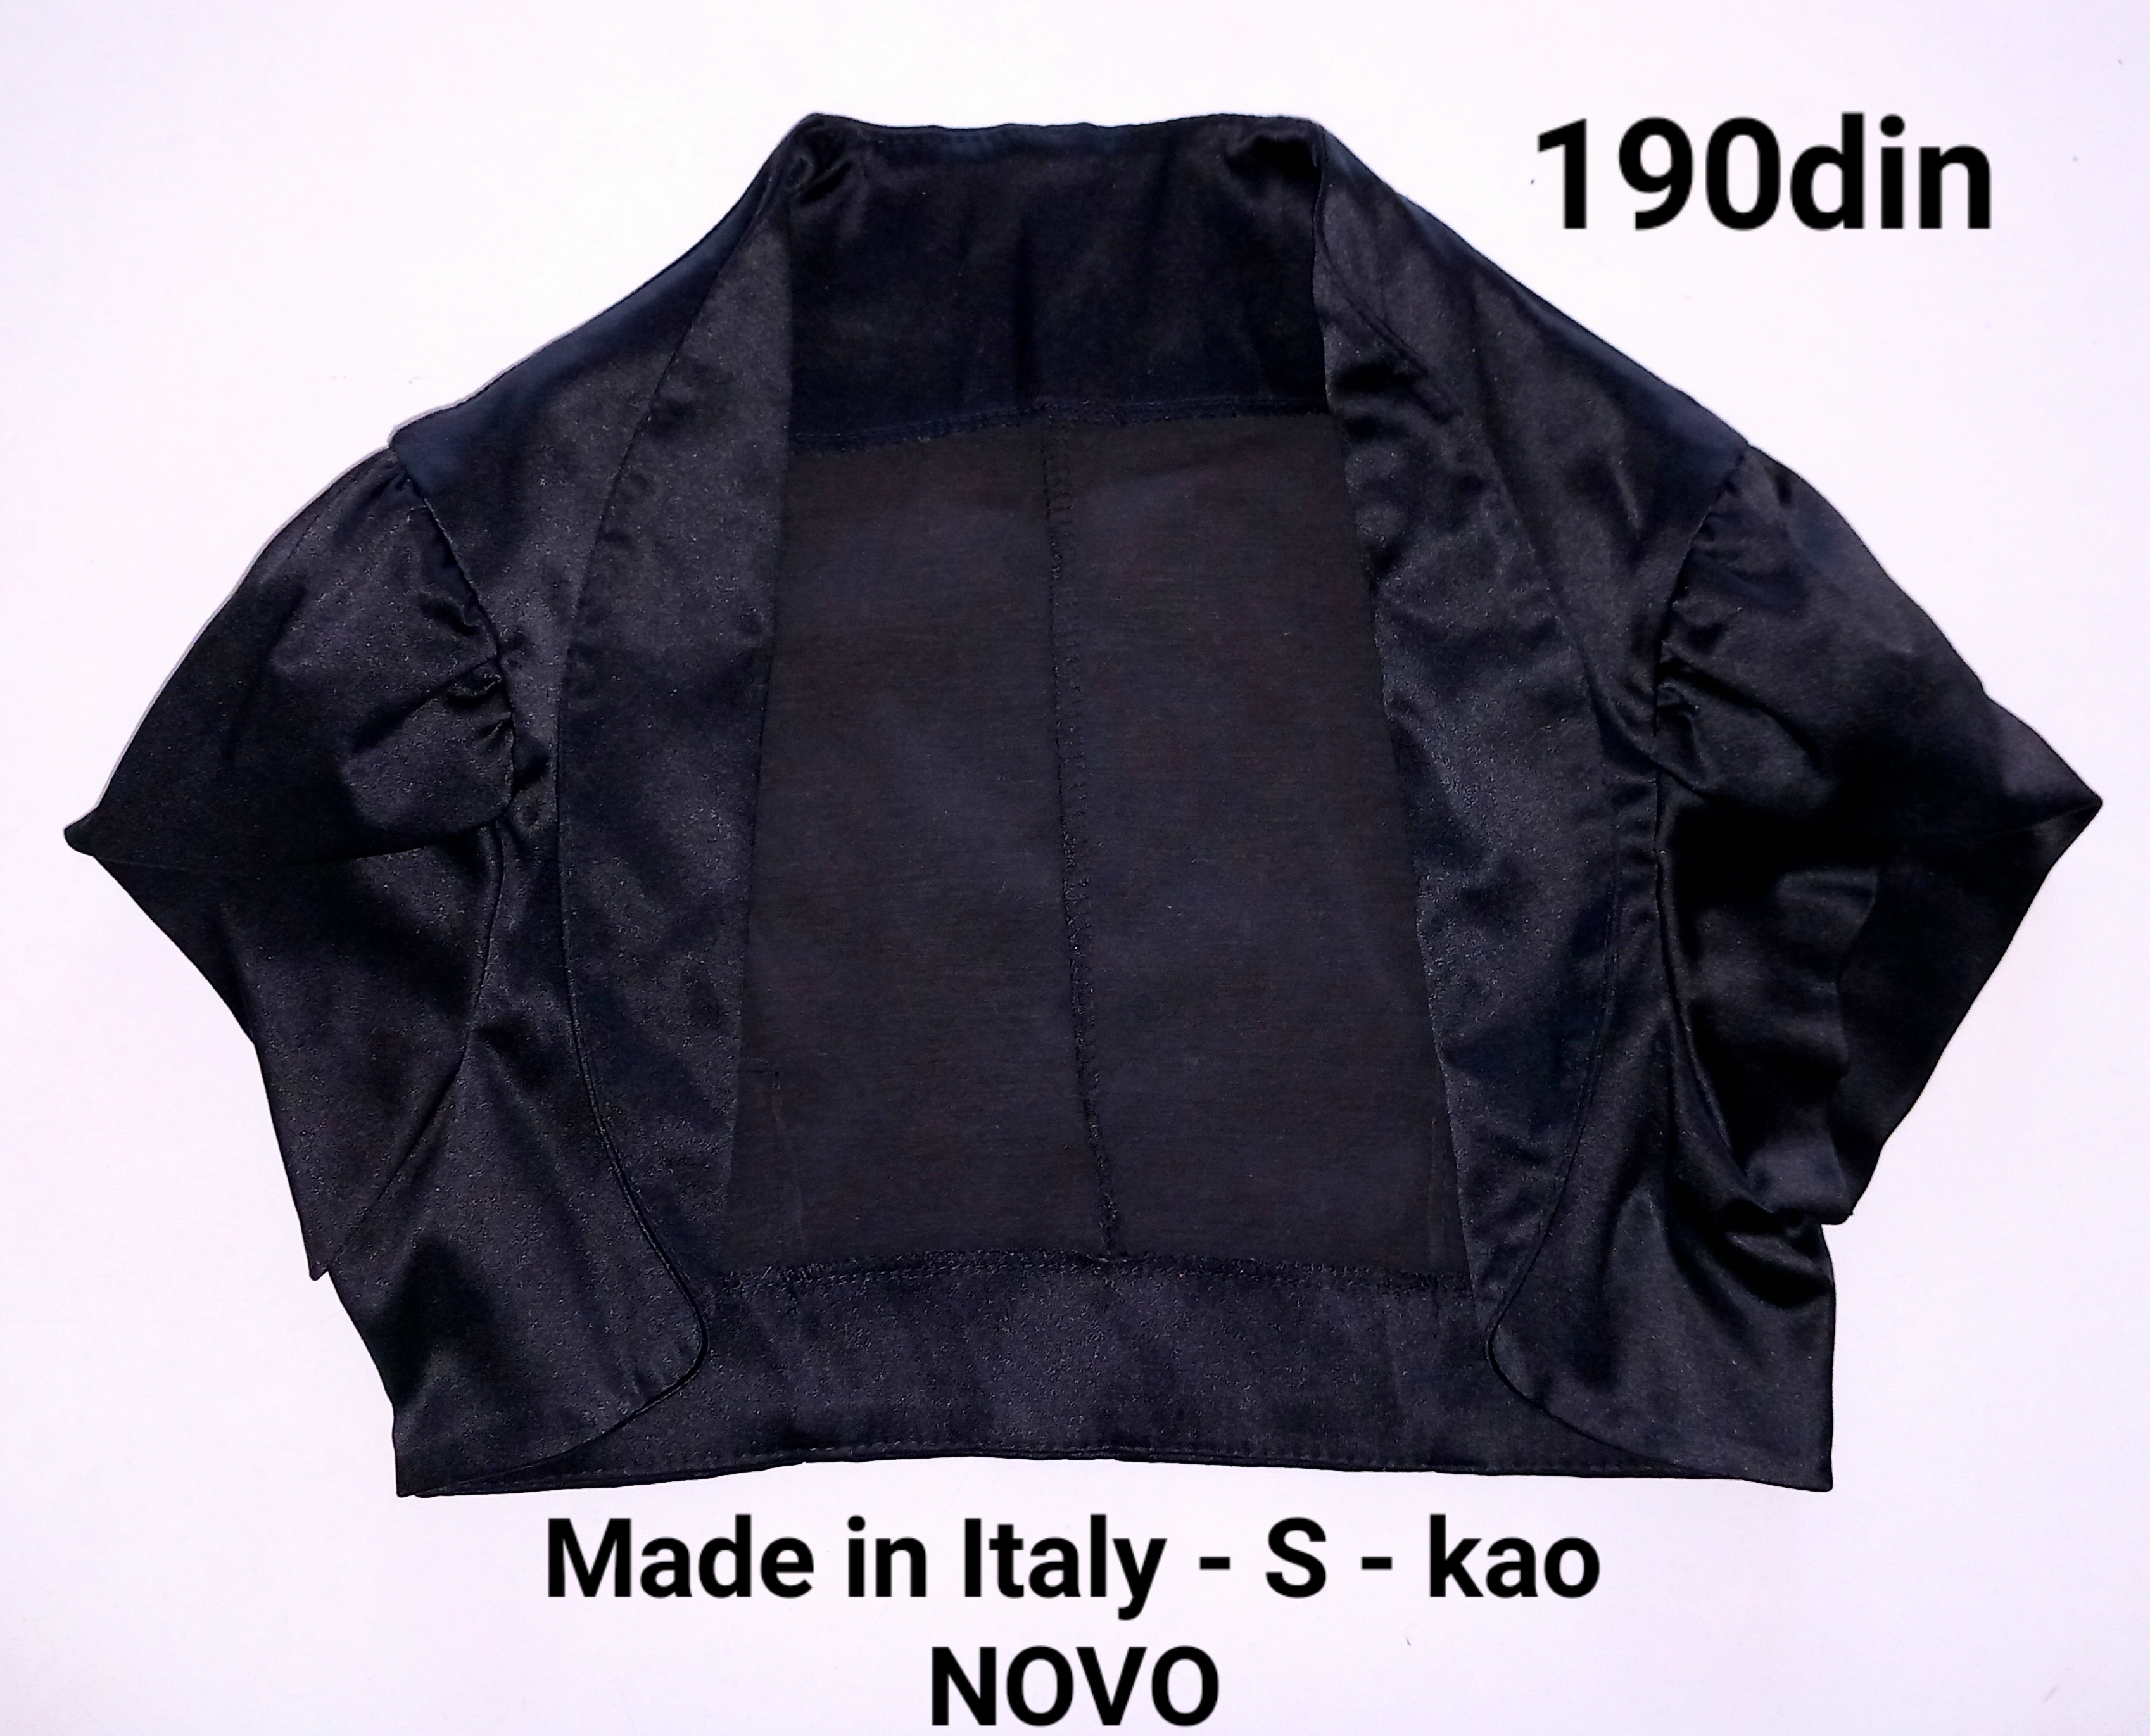 Crni elegantni bolero Made in Italy S - kao NOVO